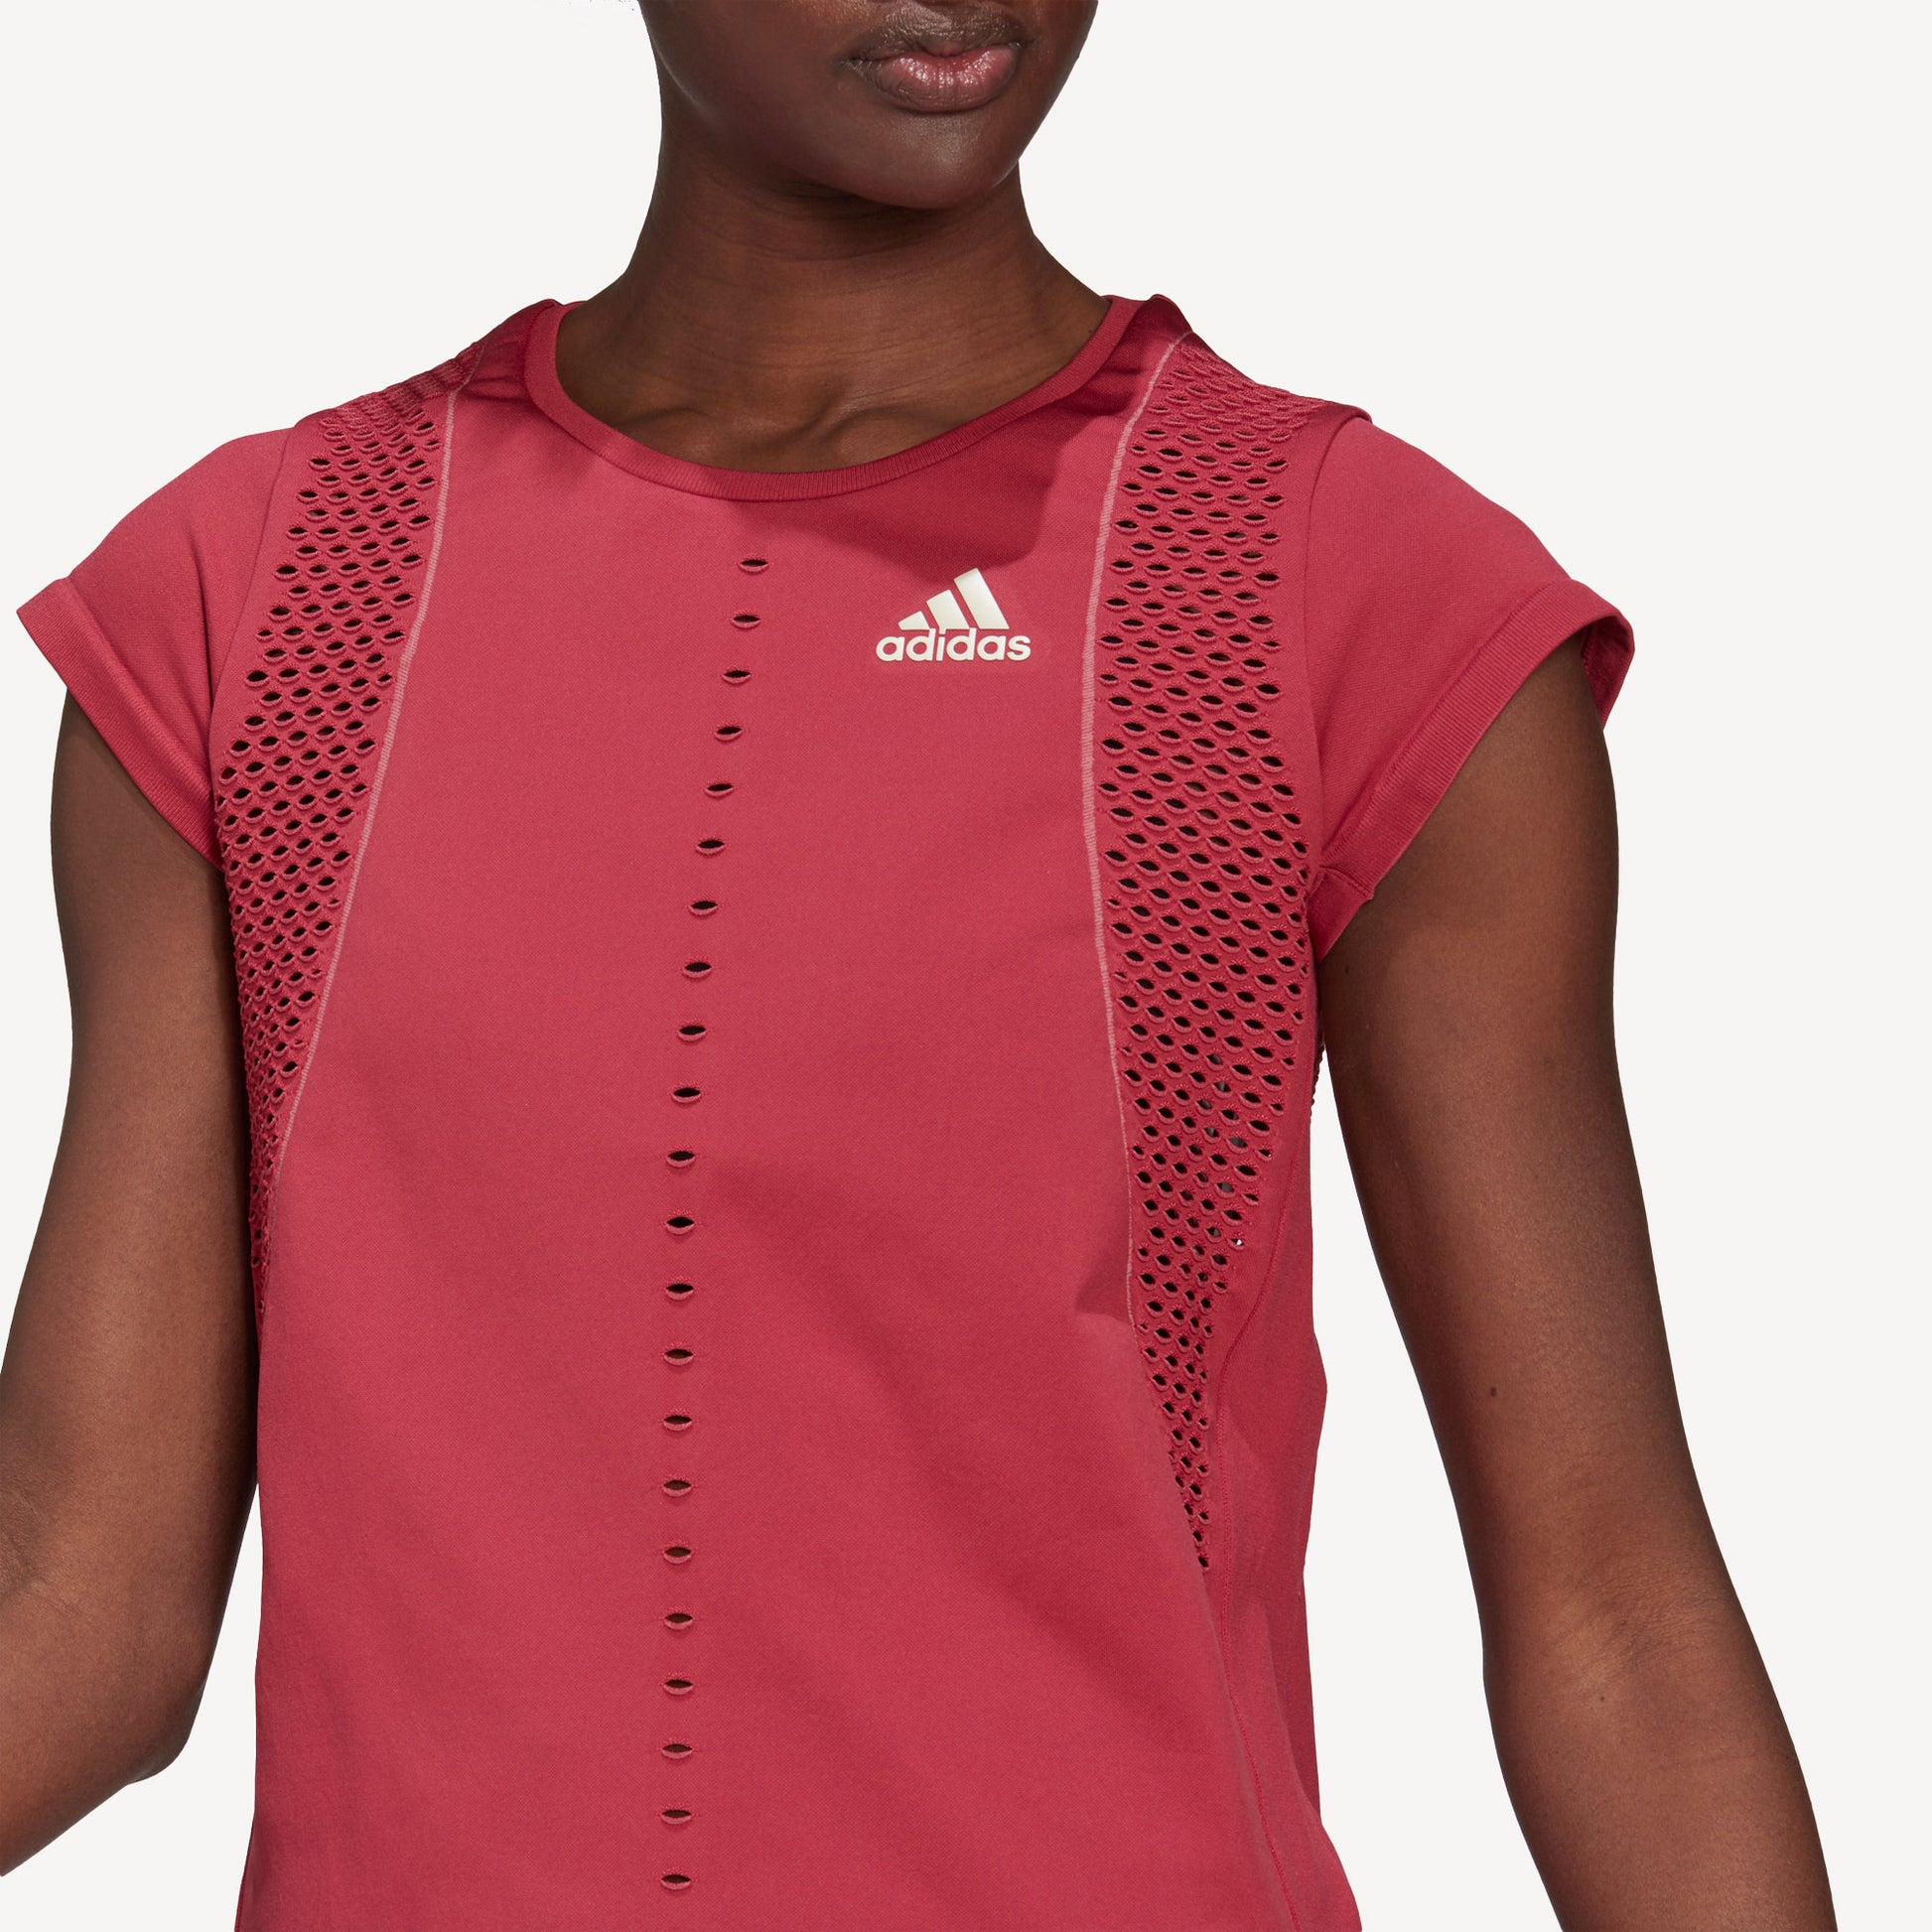 adidas Primeknit Primeblue Women's Tennis Shirt Pink (4)